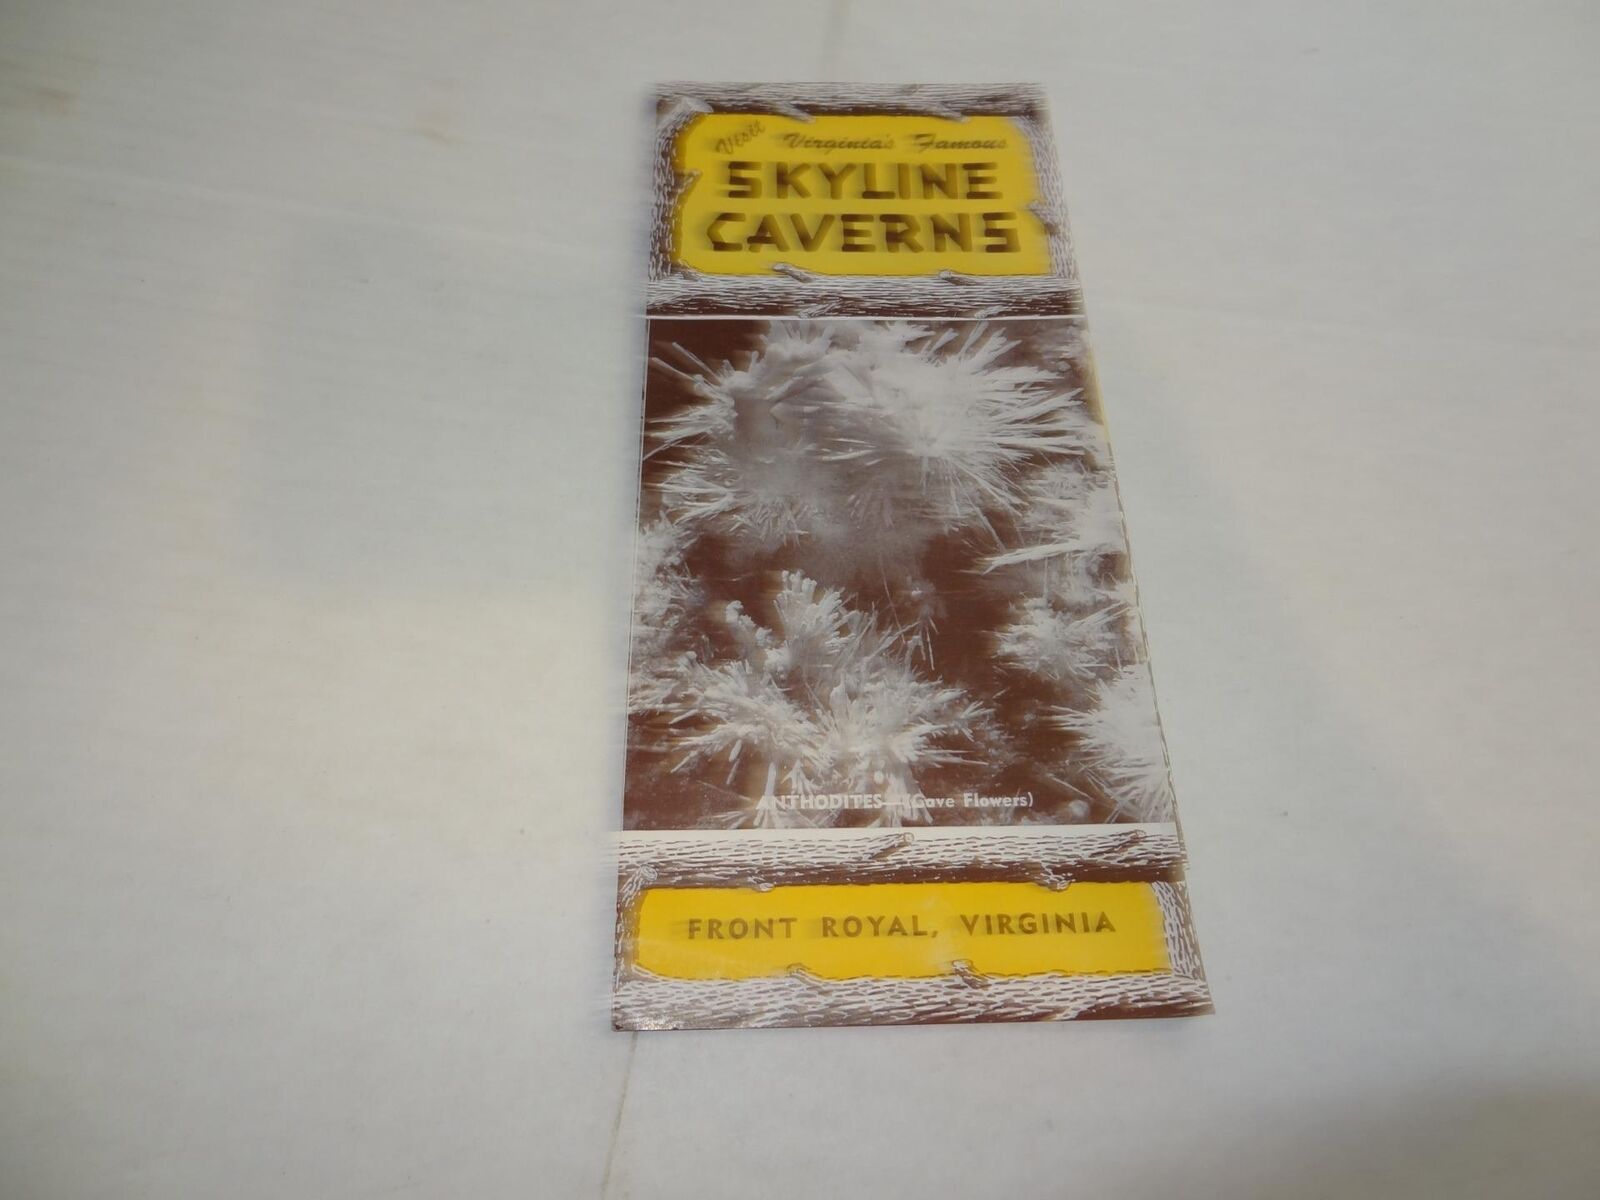 Civil War Centennial 1961-1965,Visit Virginia's Skyline Caverns,Front Royal,Va